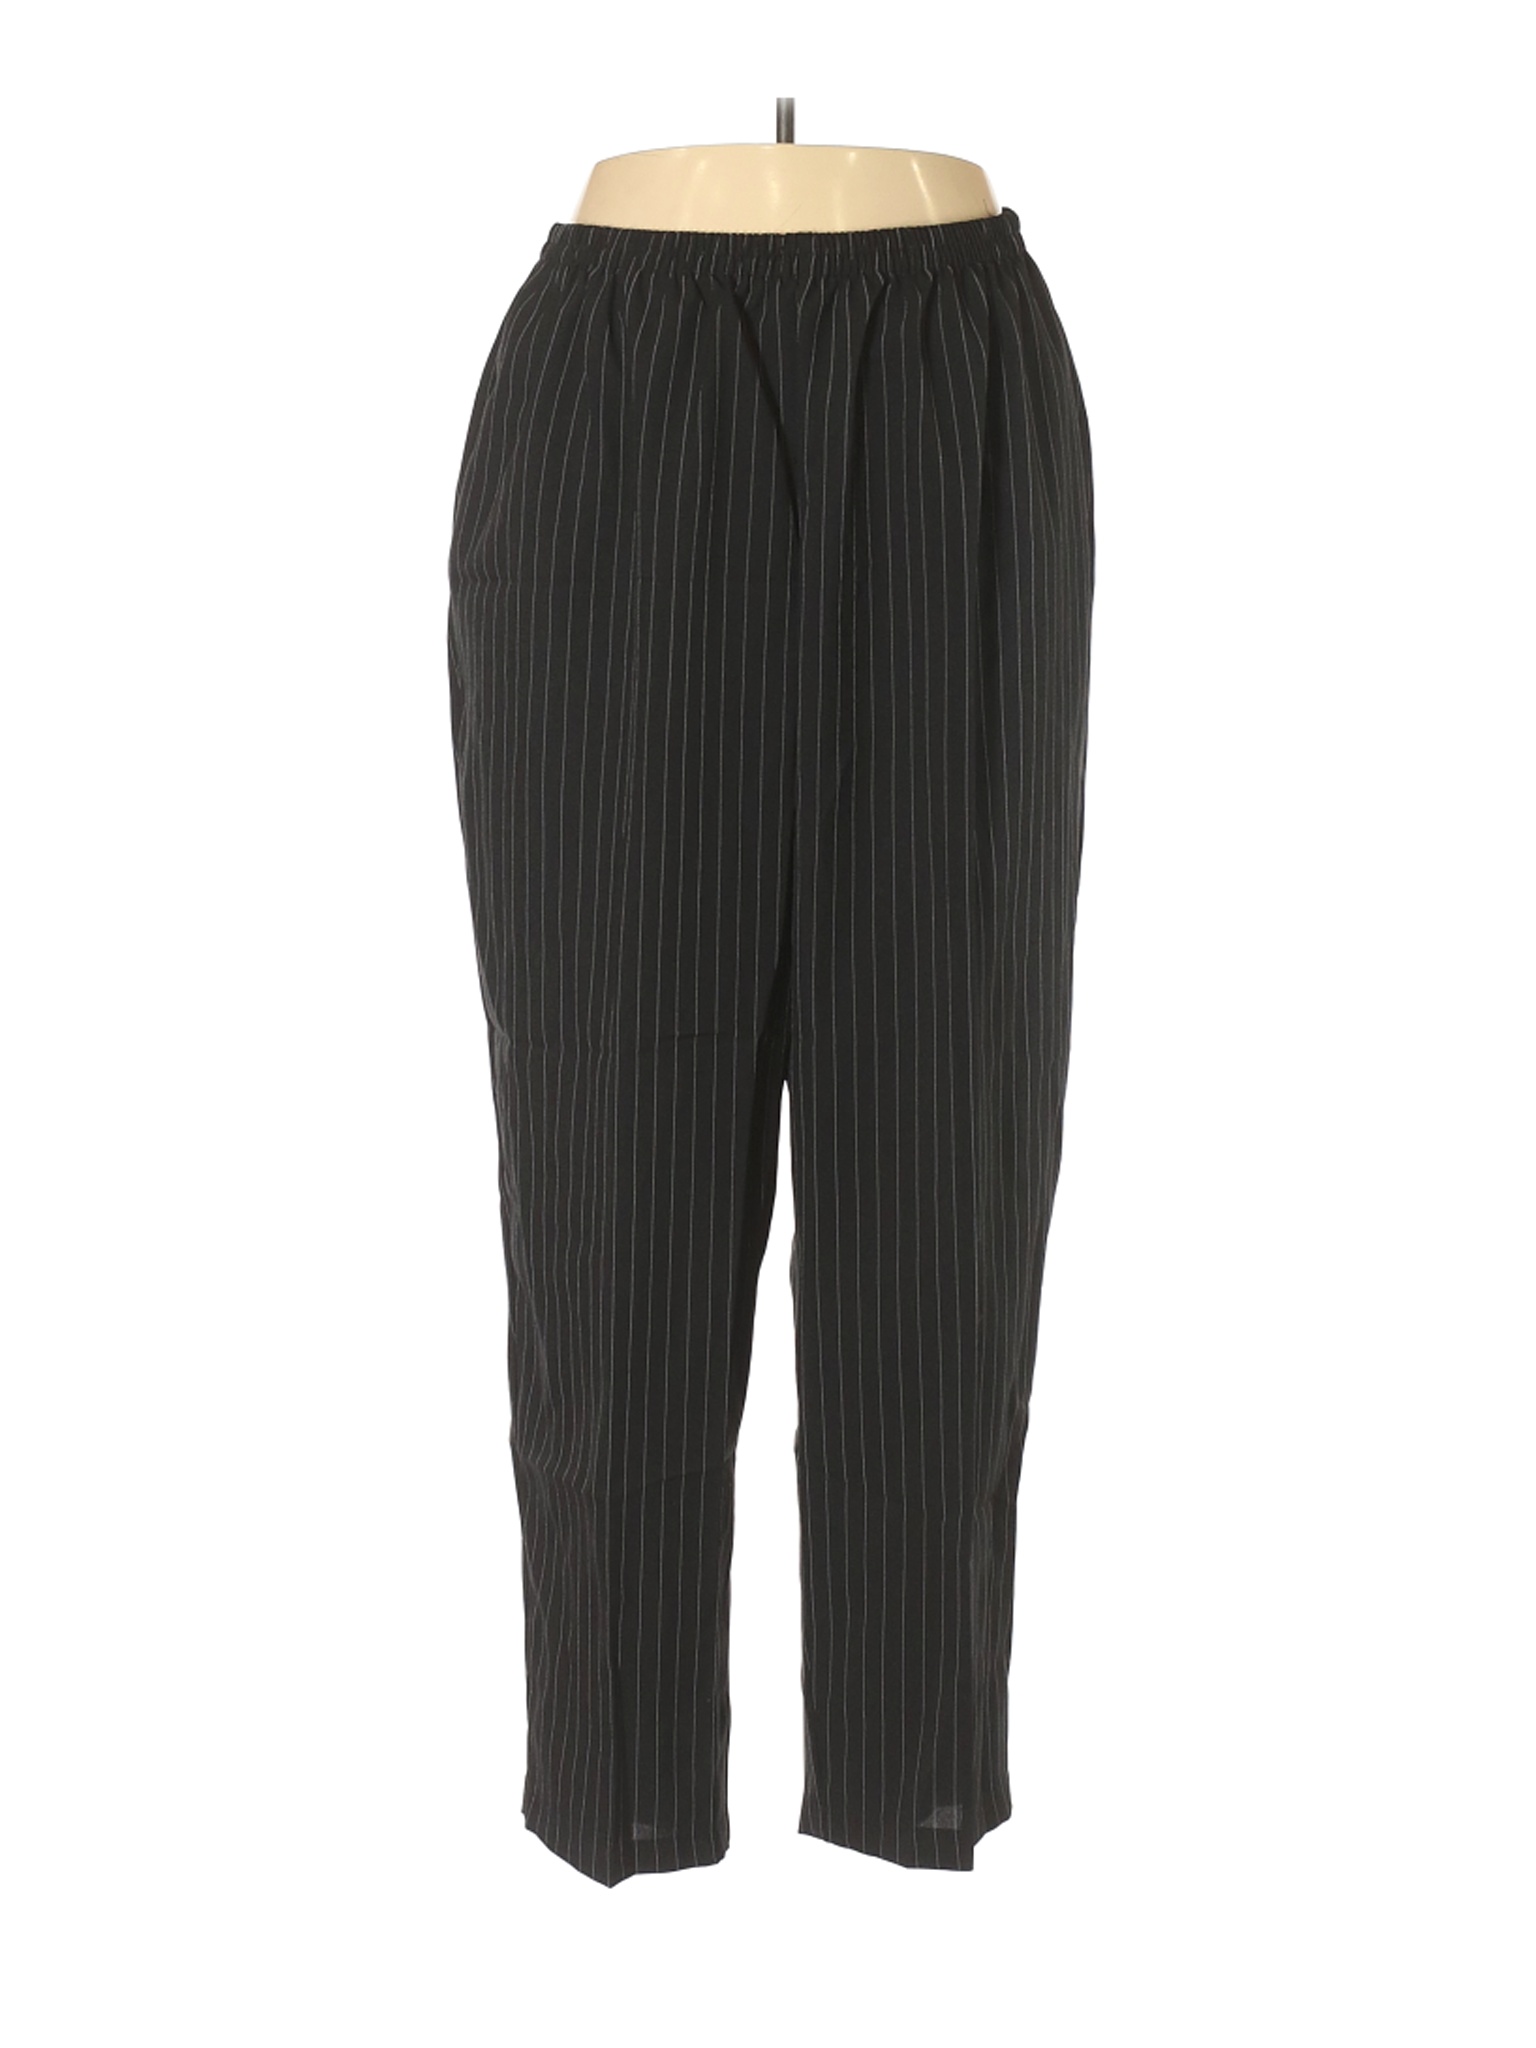 Just My Size Women Black Casual Pants 2X Plus | eBay